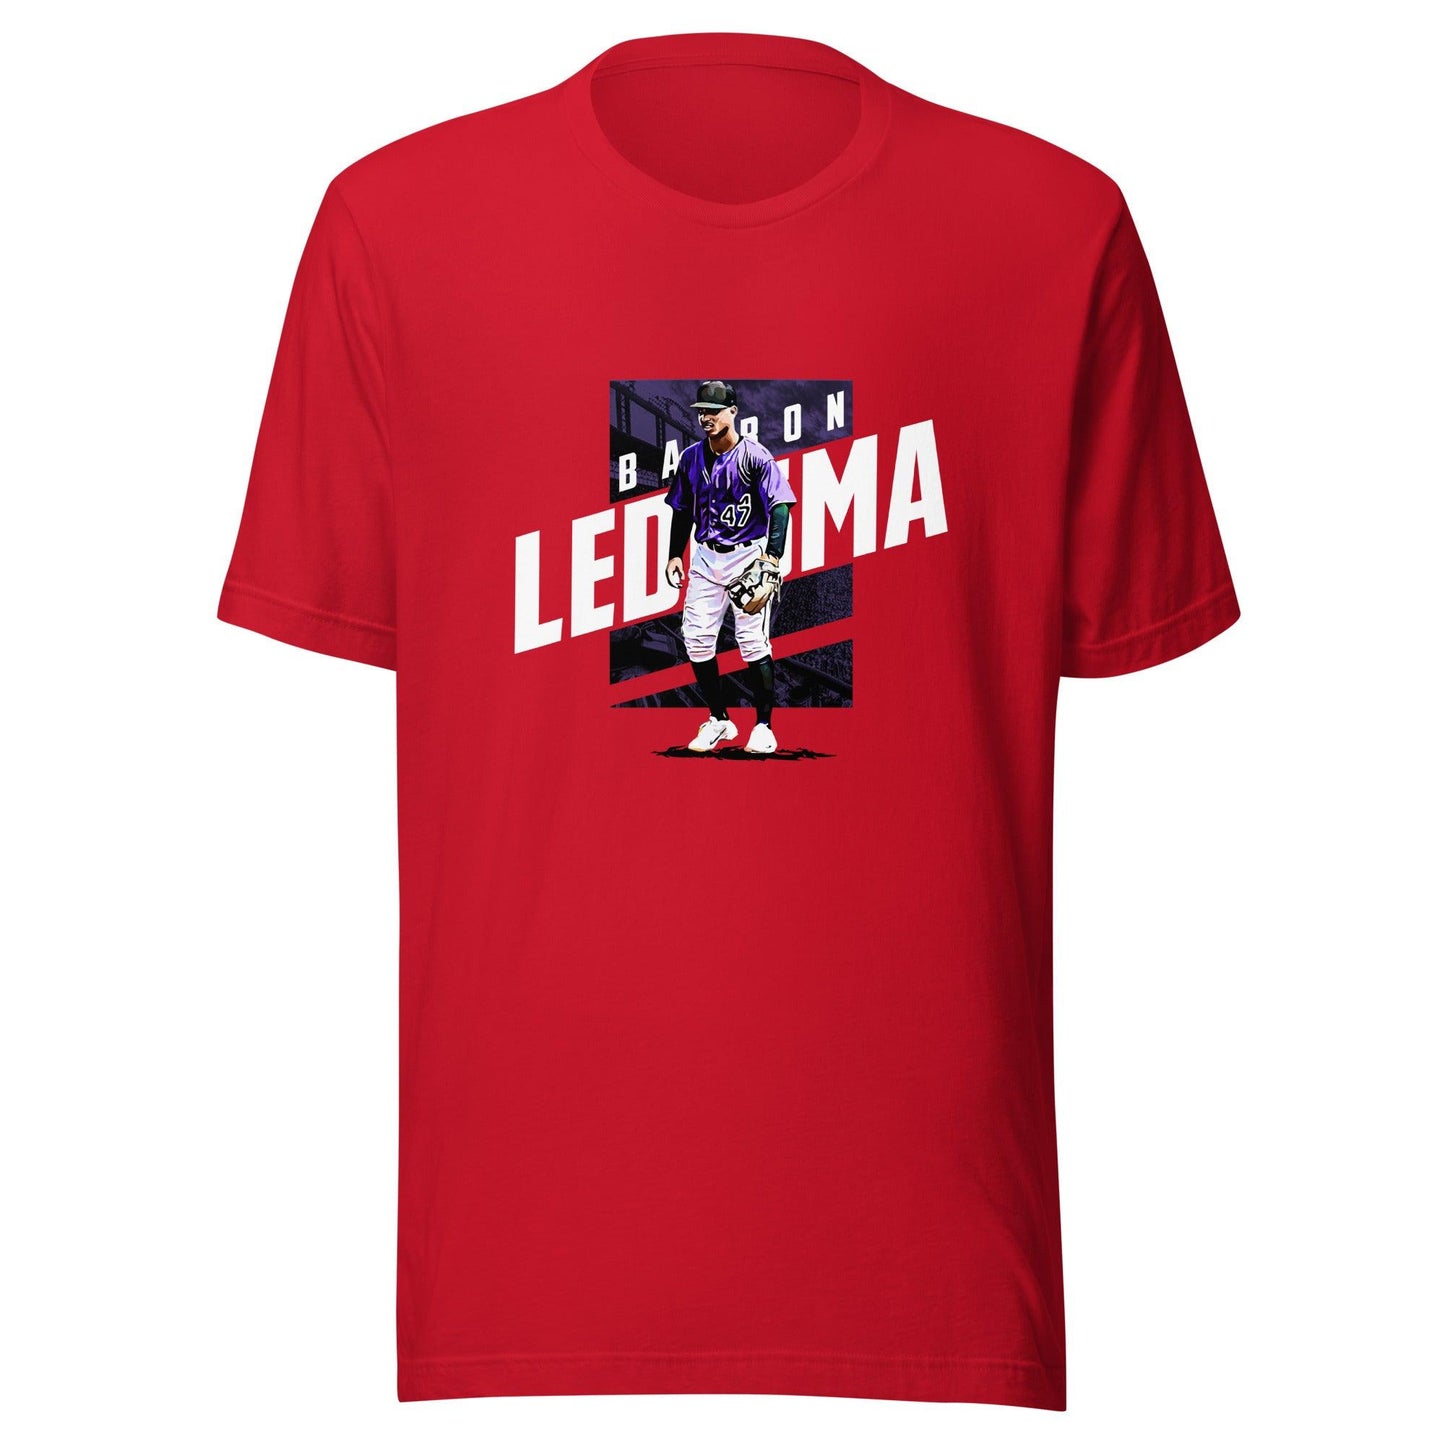 Bairon Ledesma "Gameday" t-shirt - Fan Arch